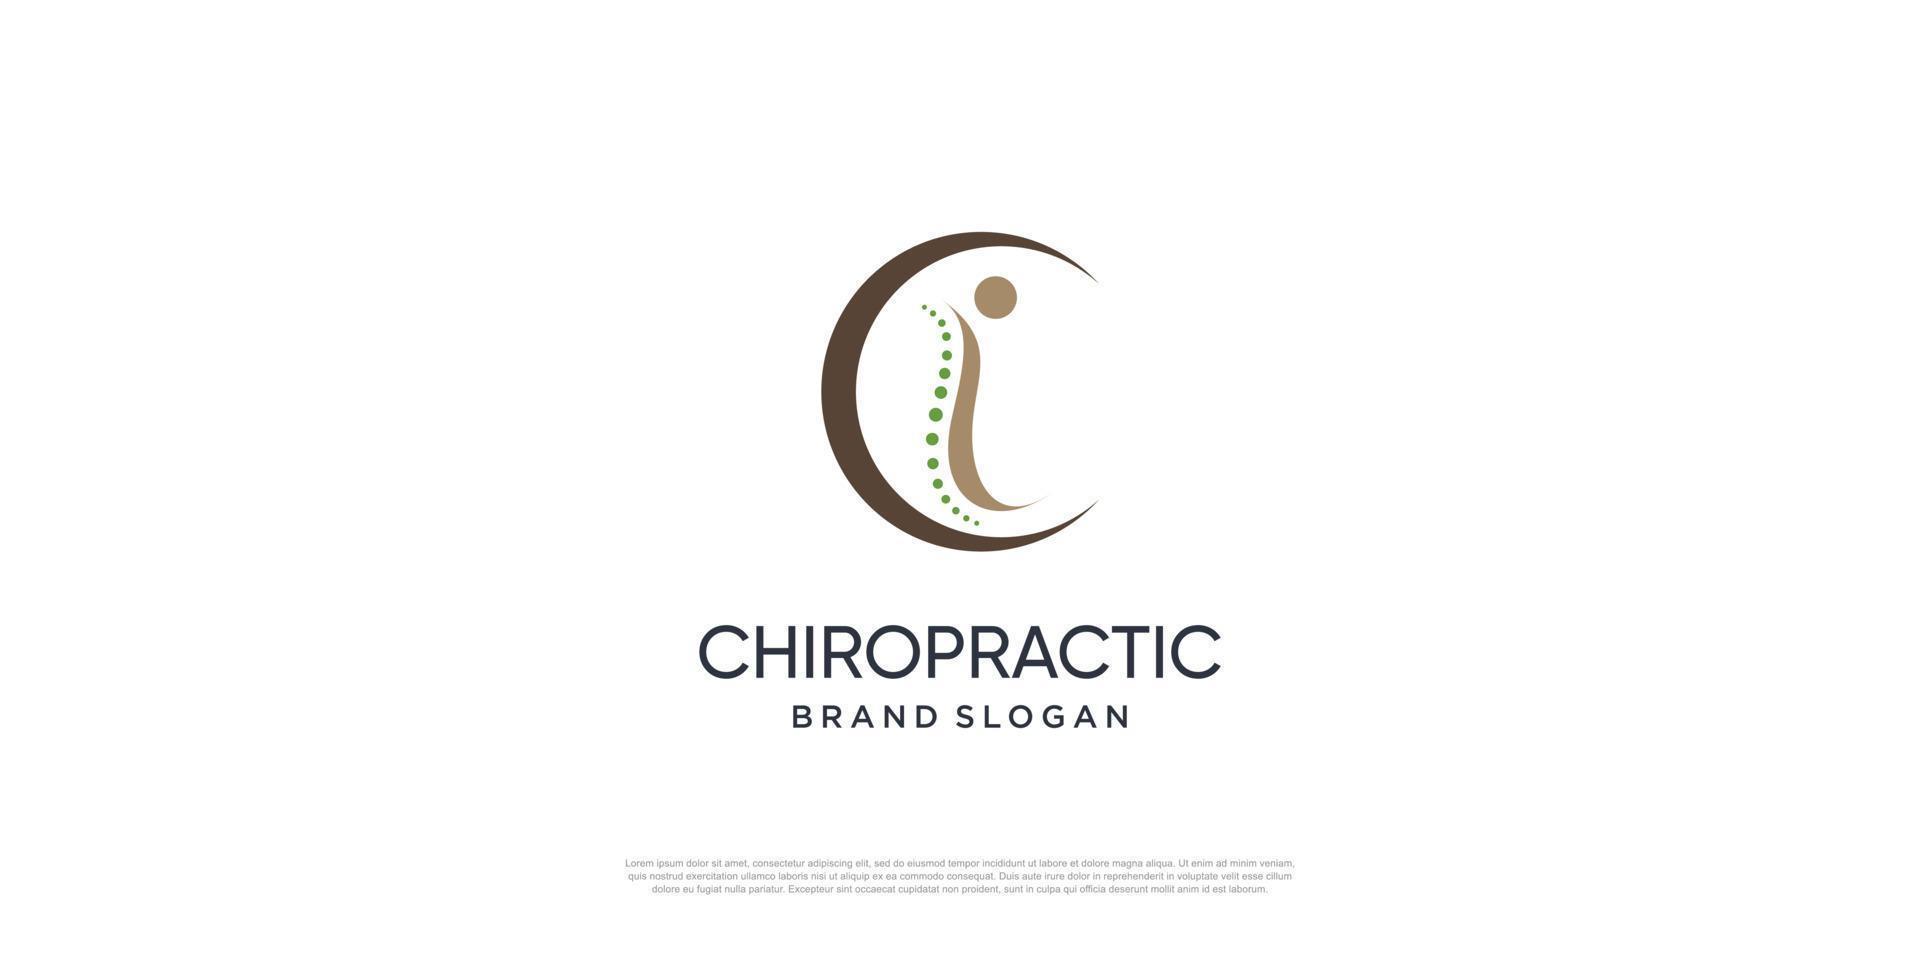 Chiropractic logo with creative unique element Premium Vector part 3